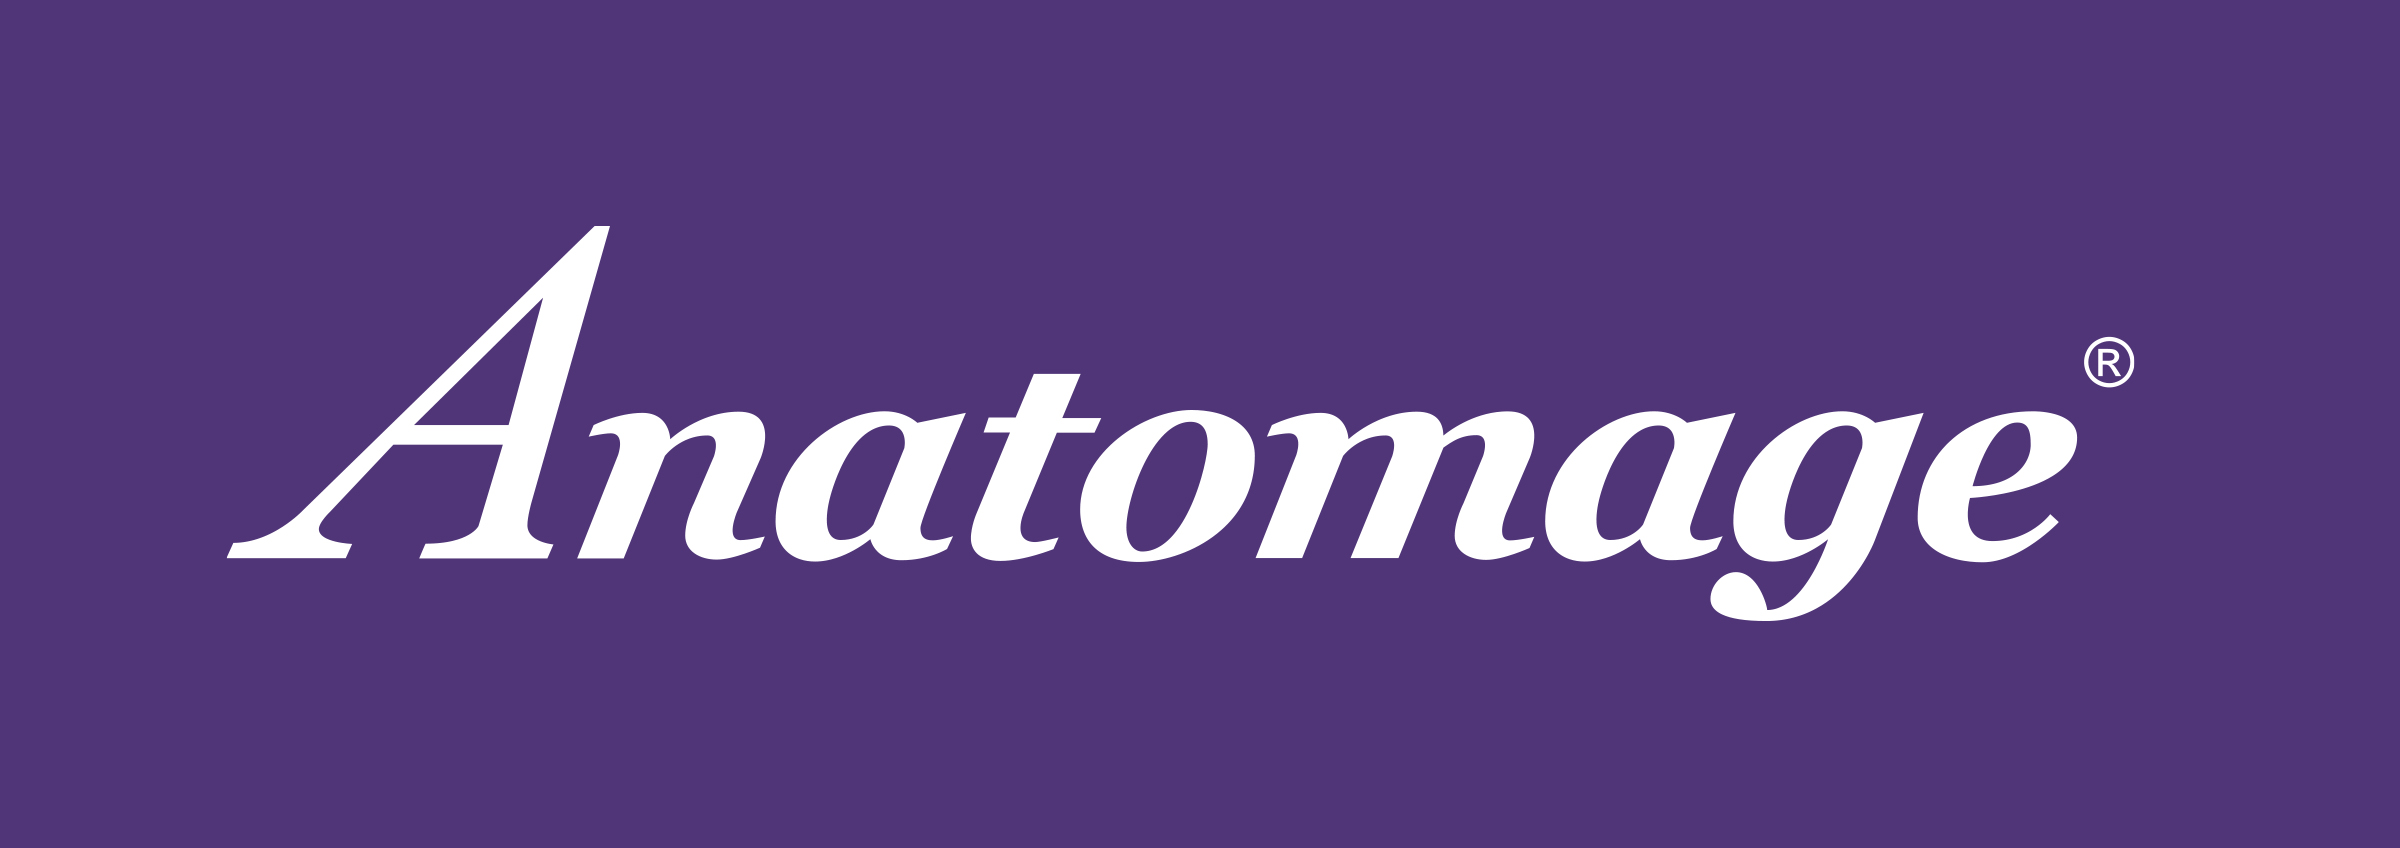 Anatomage, Inc. logo